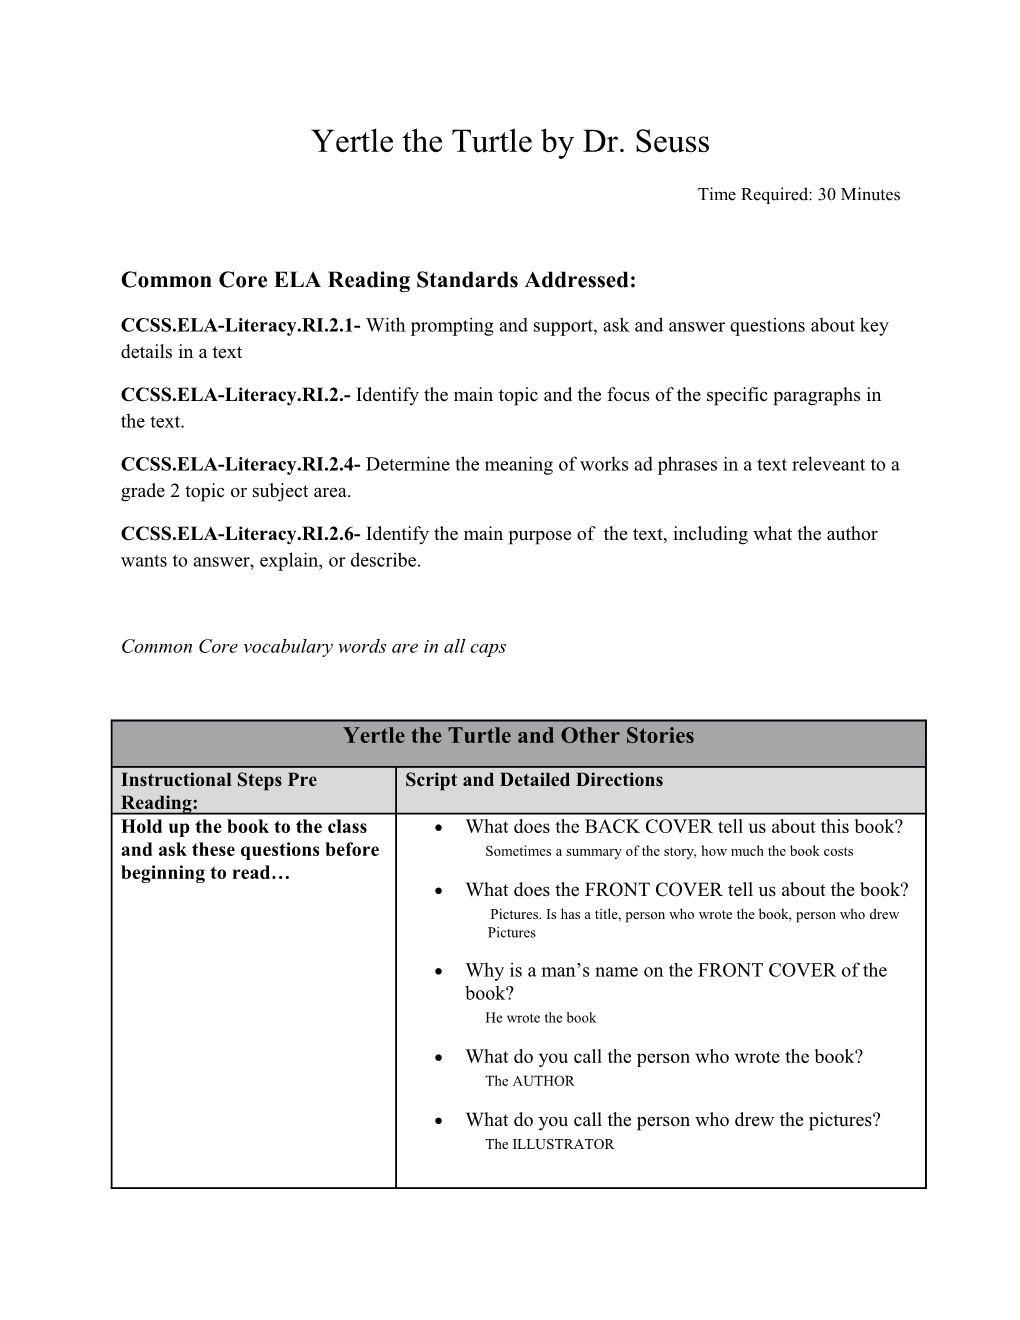 Common Core ELA Reading Standards Addressed